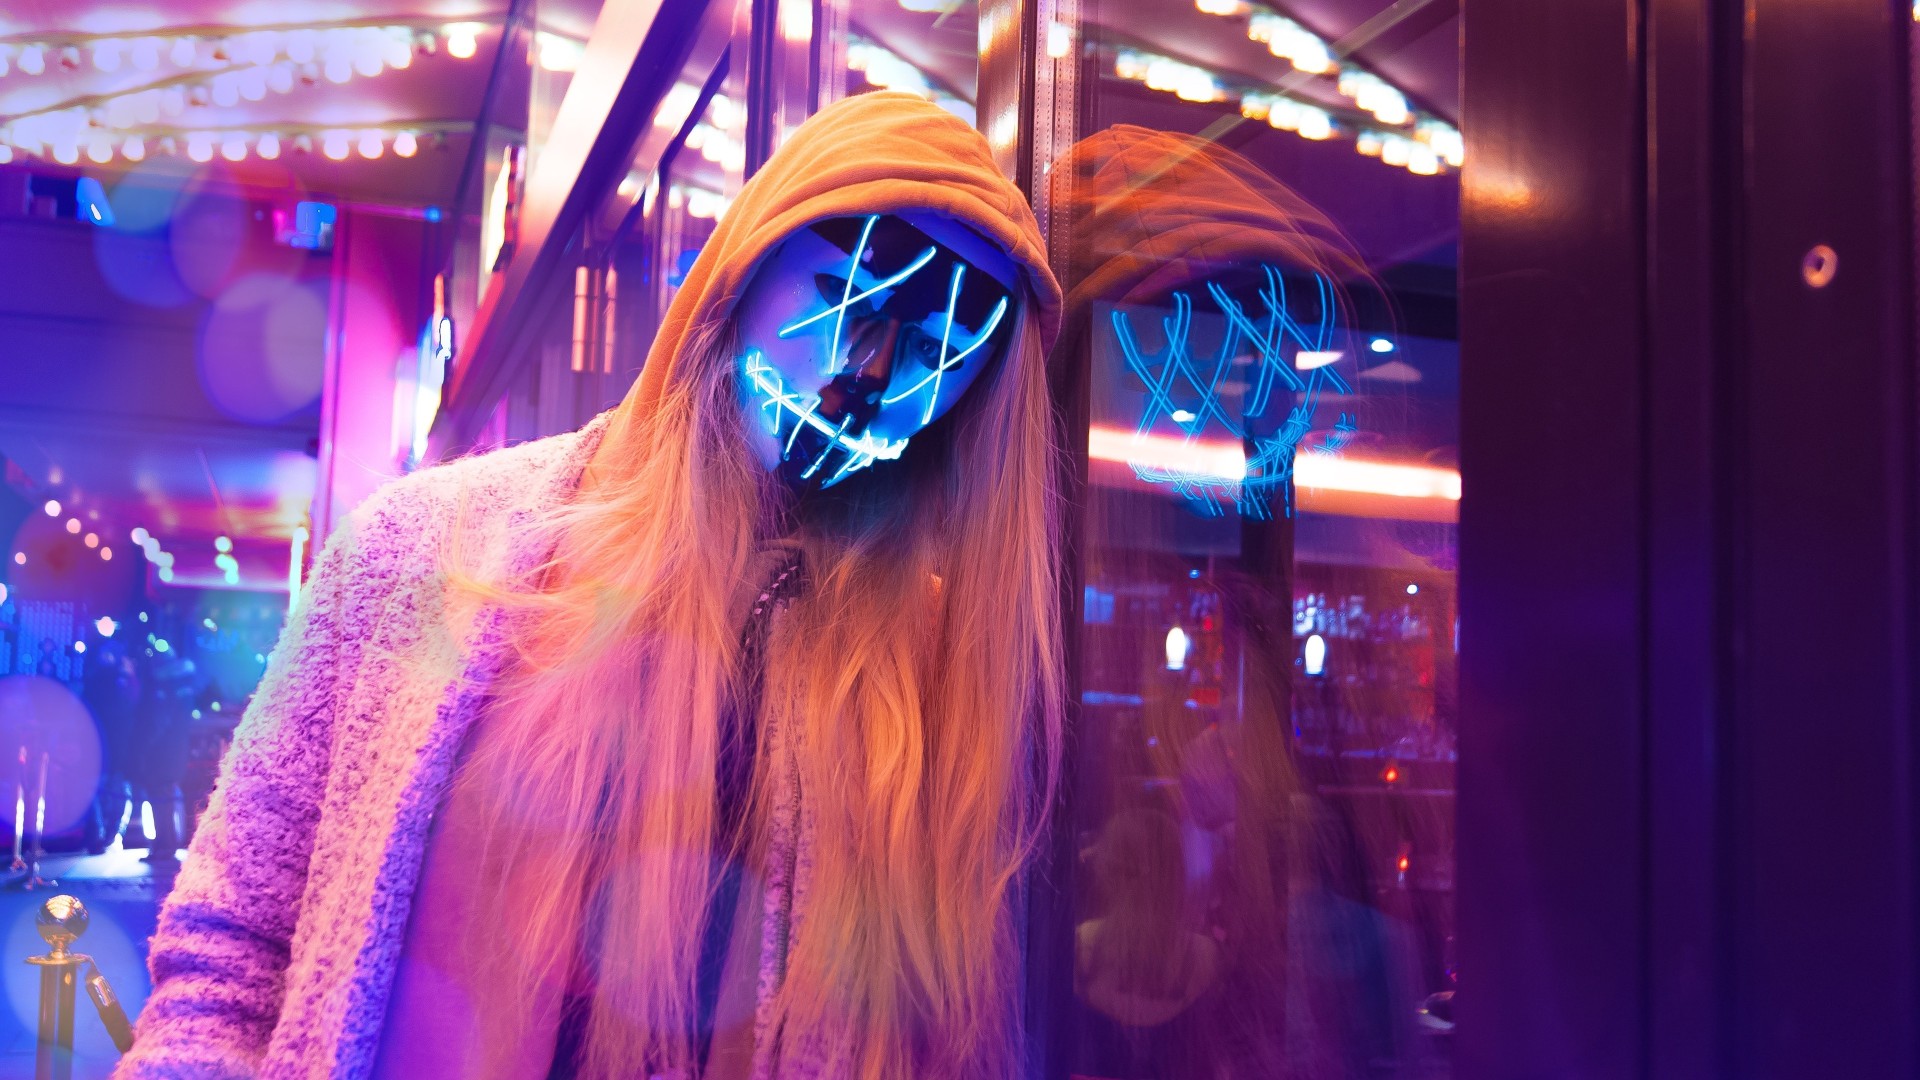 Neon Mask Girl Backgrounds PC